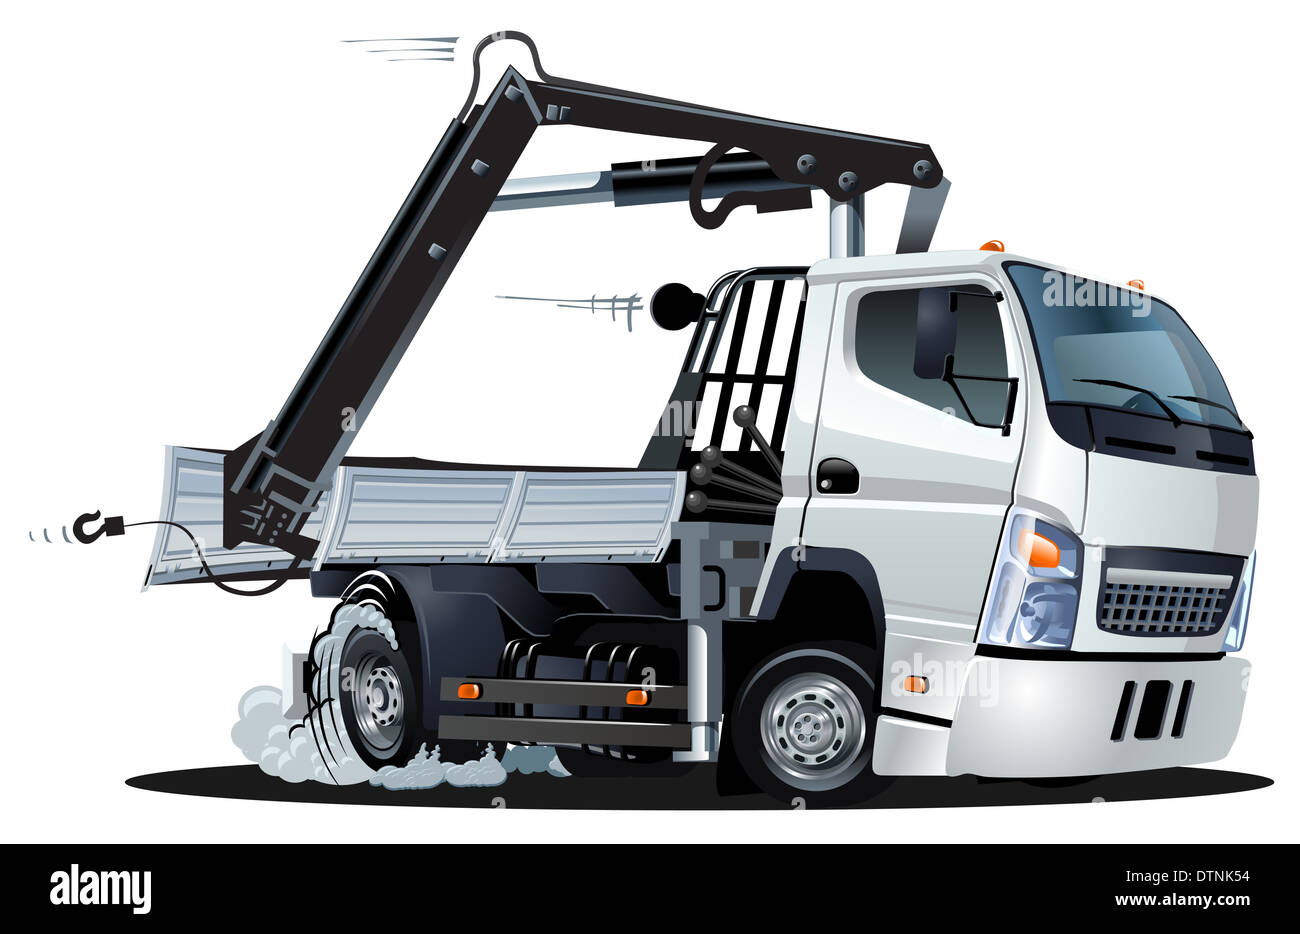 Cartoon Lkw Truck with Crane Stock Photo